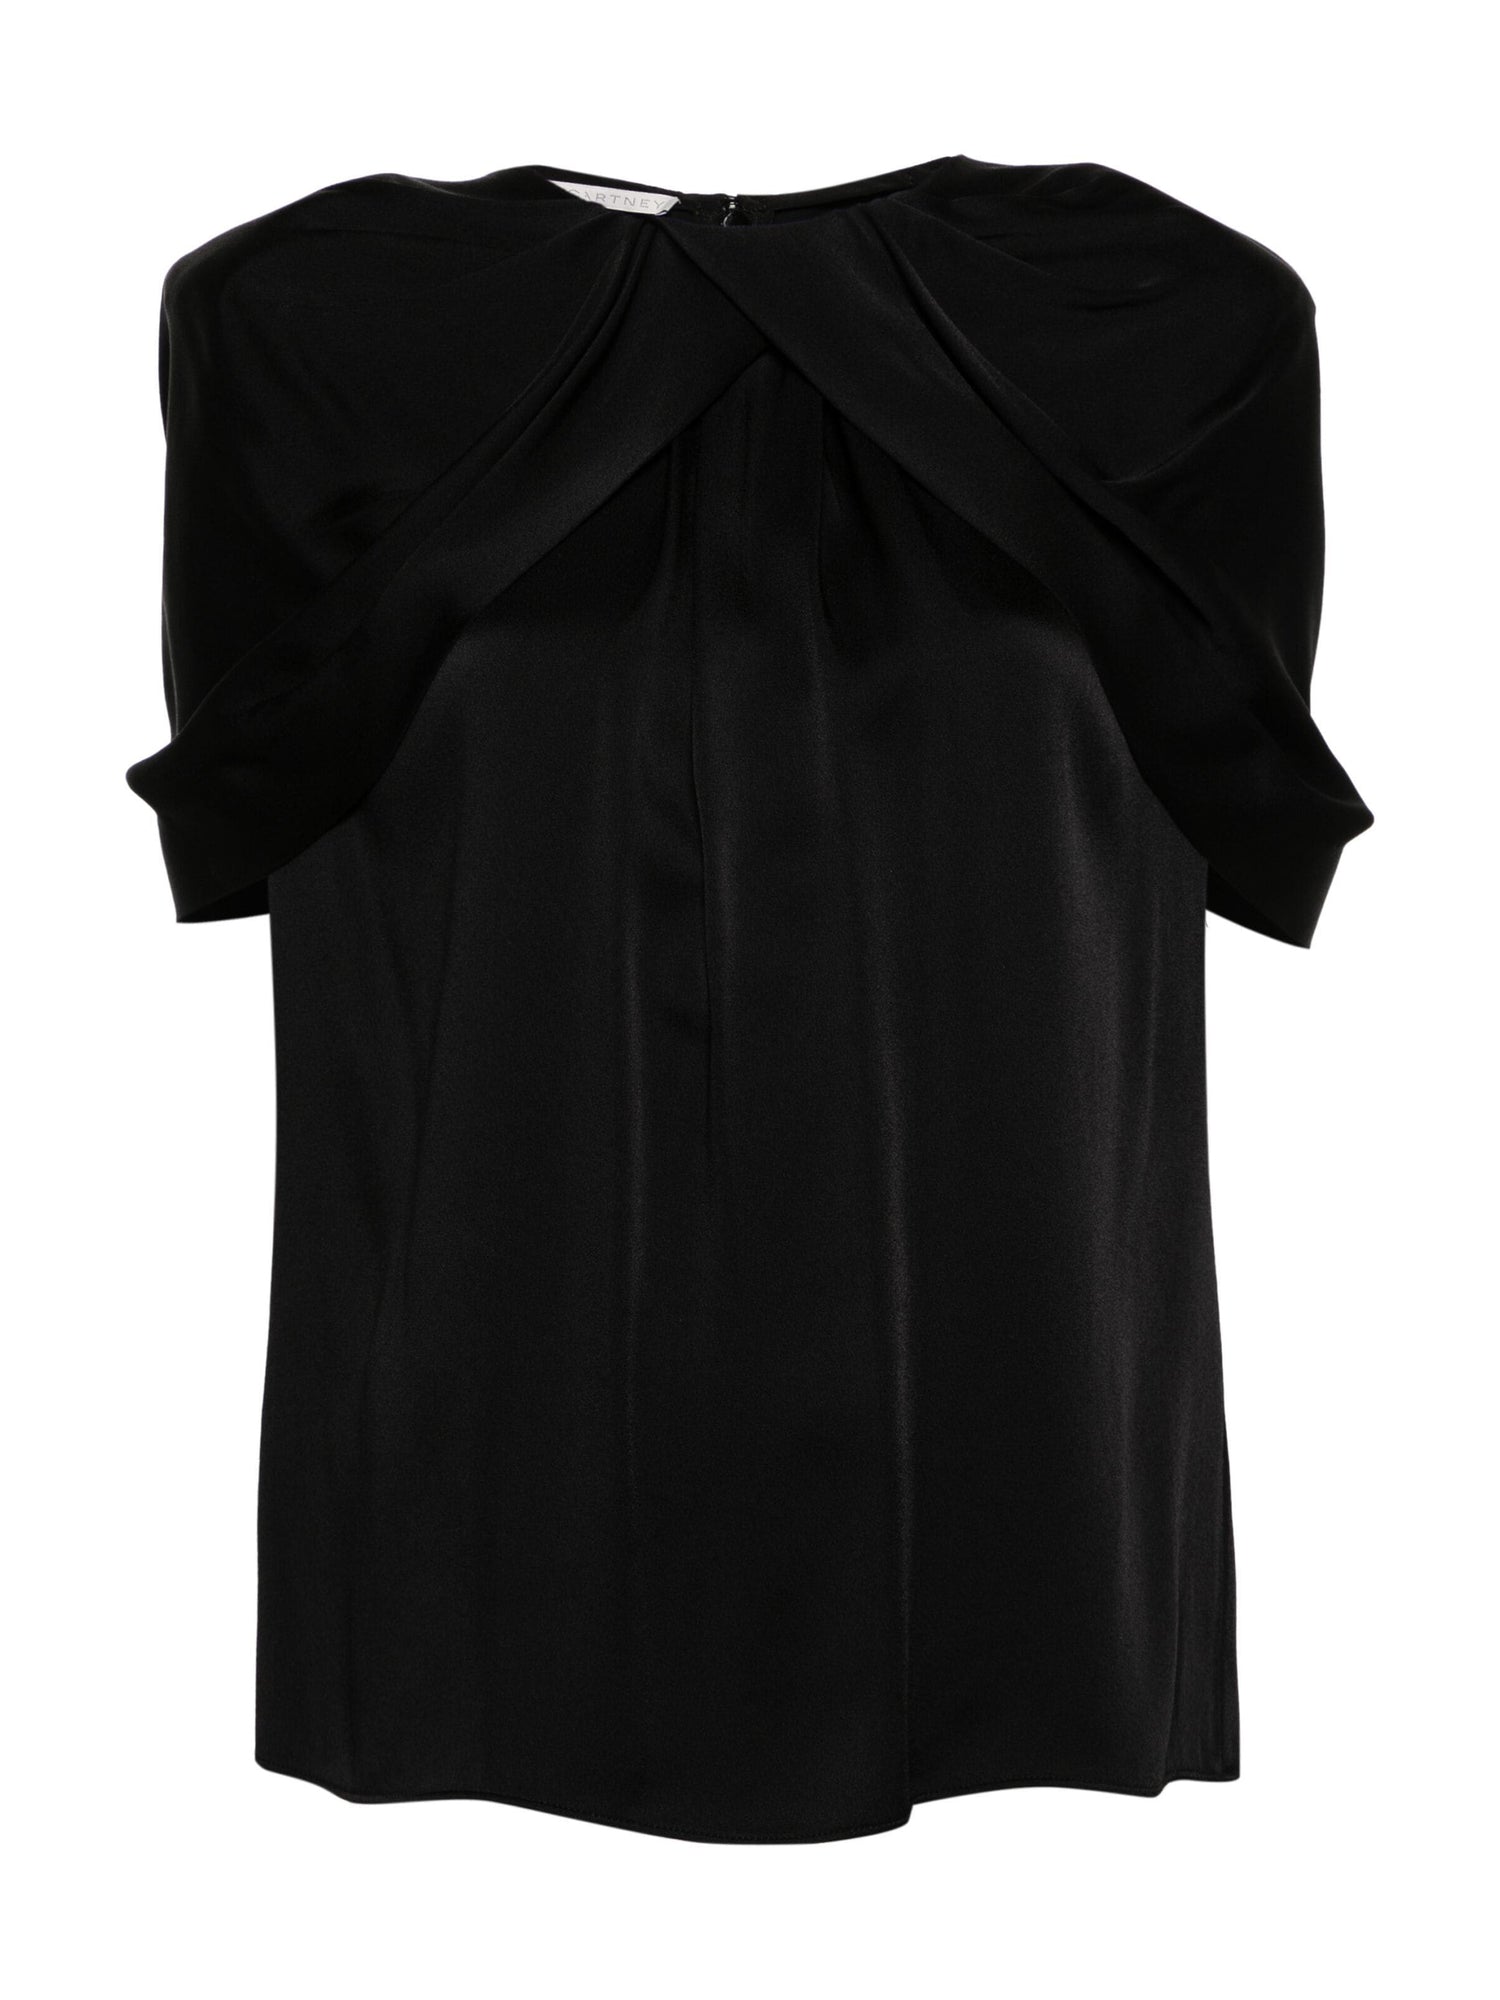 Draped cape-detail top, black